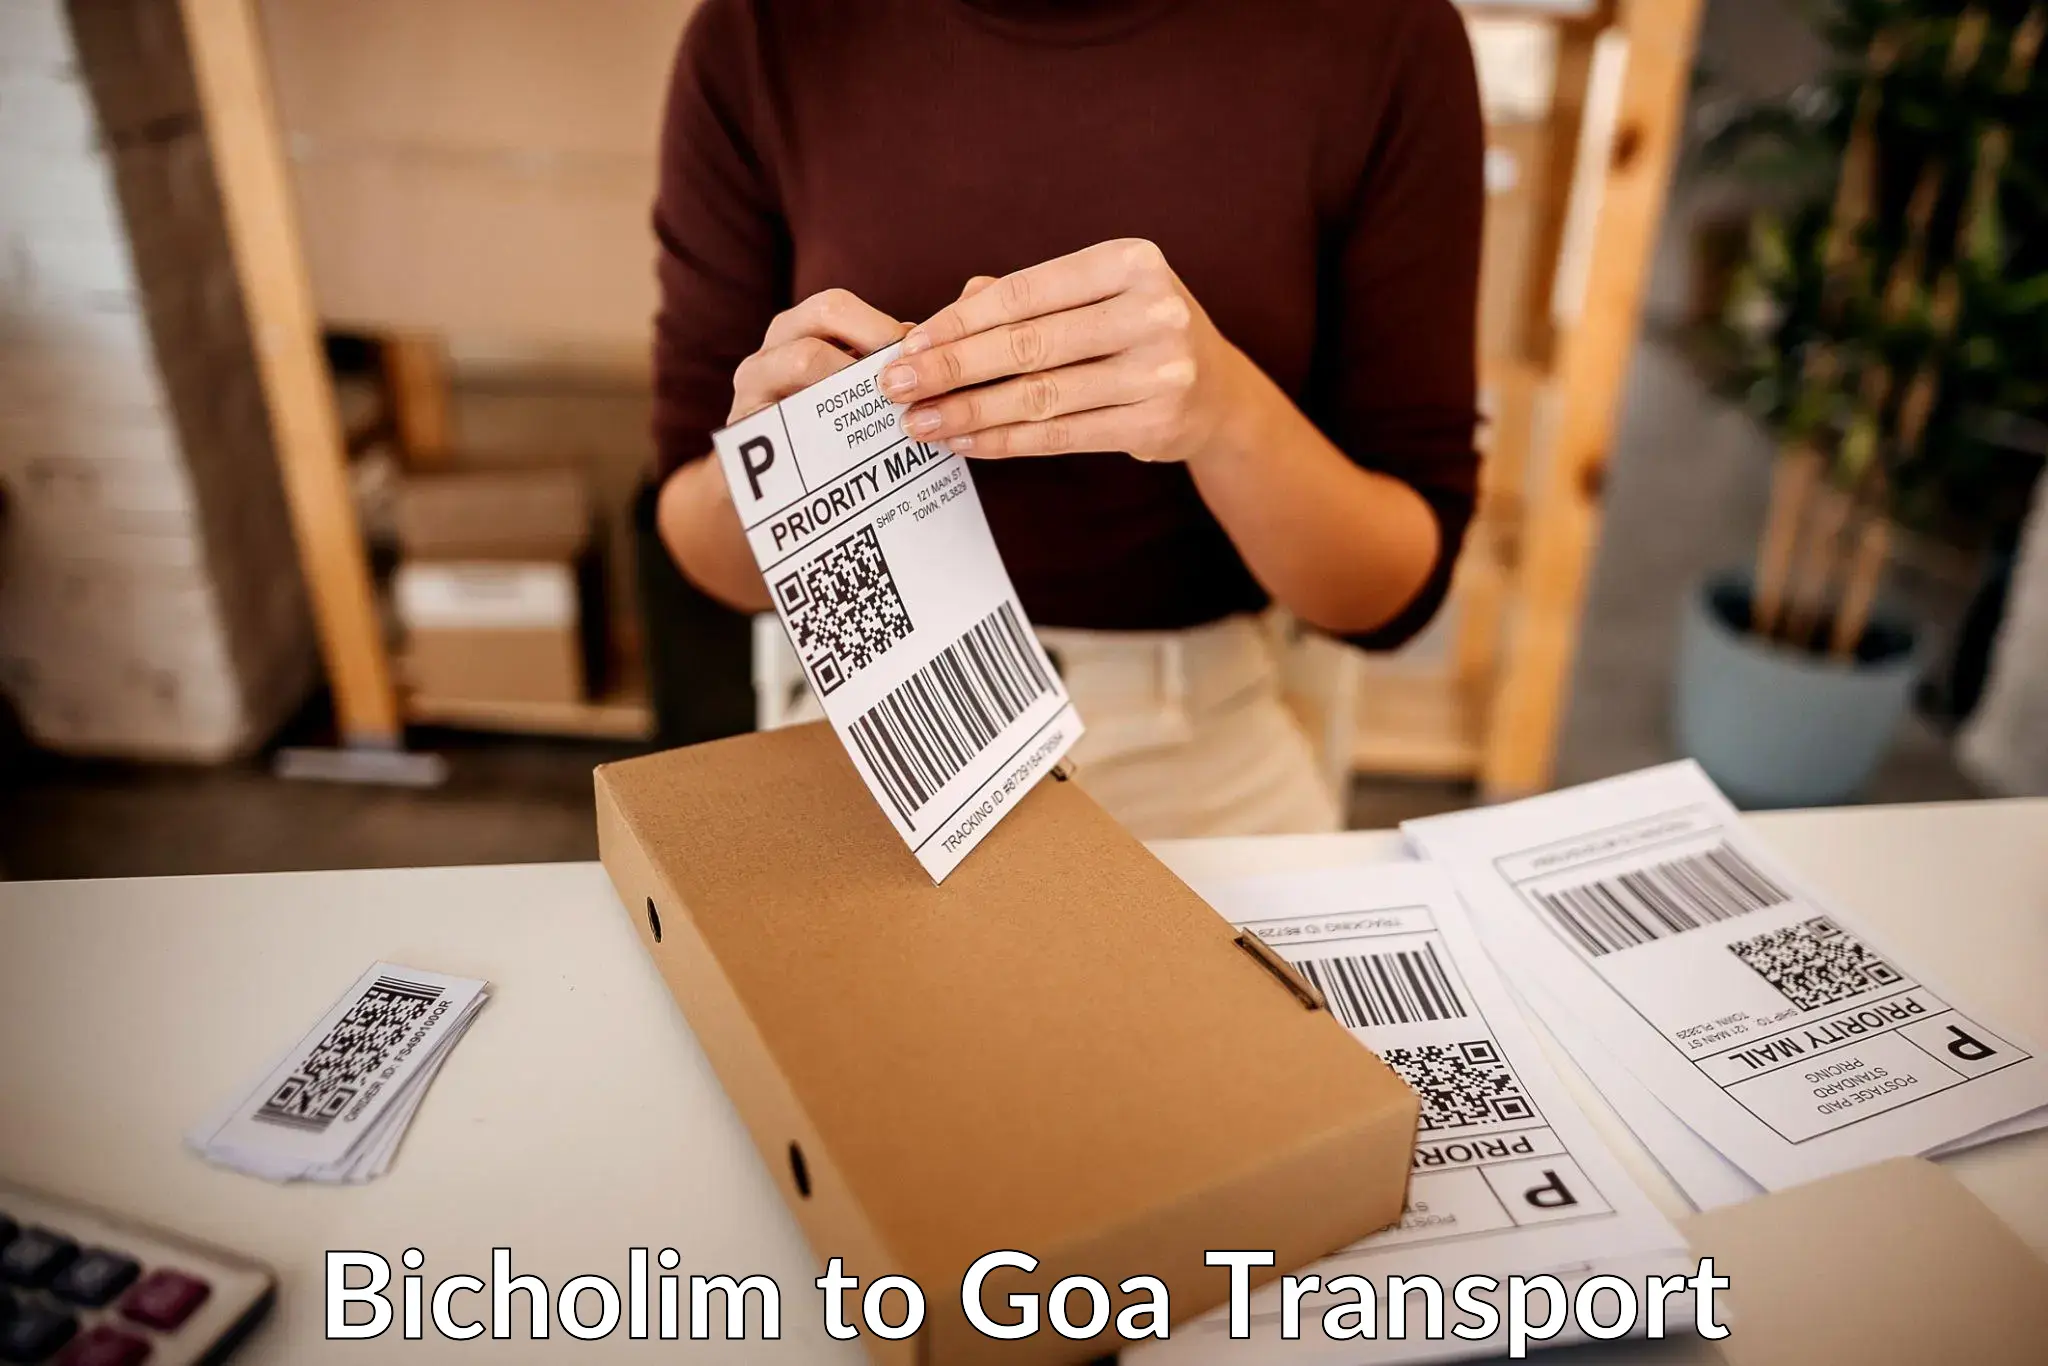 Transport in sharing Bicholim to Goa